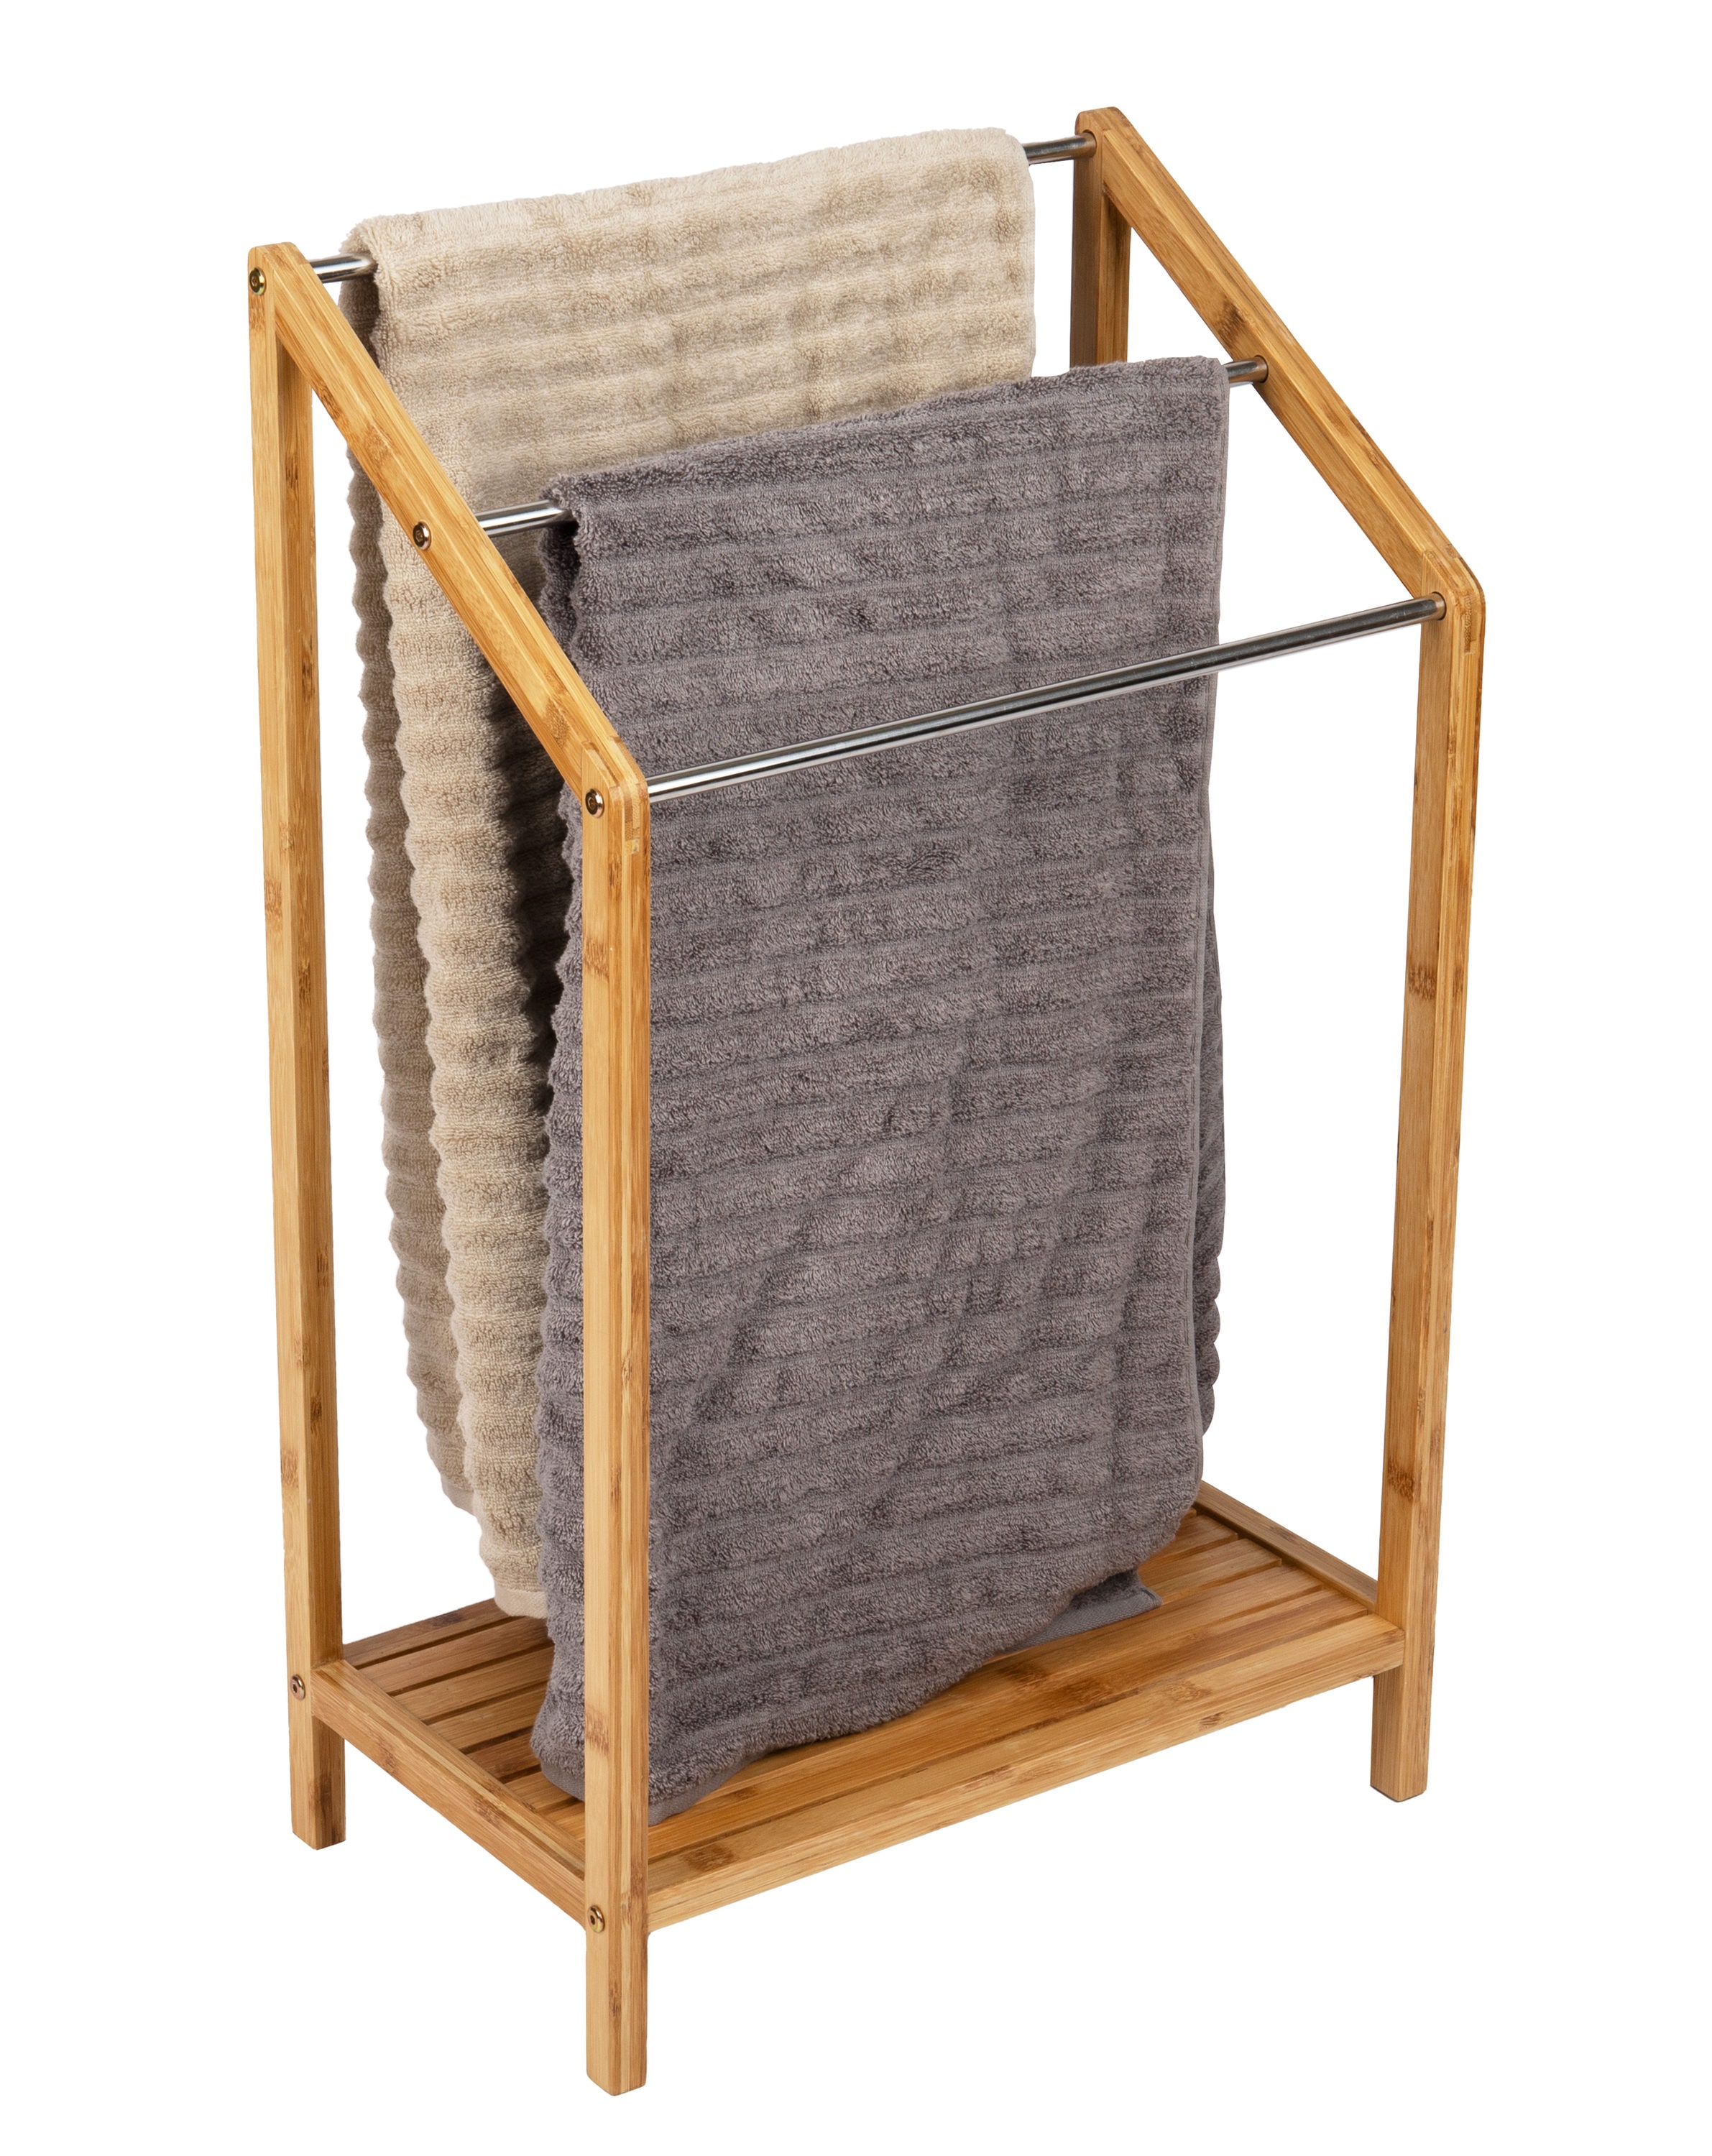 Woolite 3-Tier 14.76-in Metal Drying Rack in the Clotheslines & Drying Racks  department at